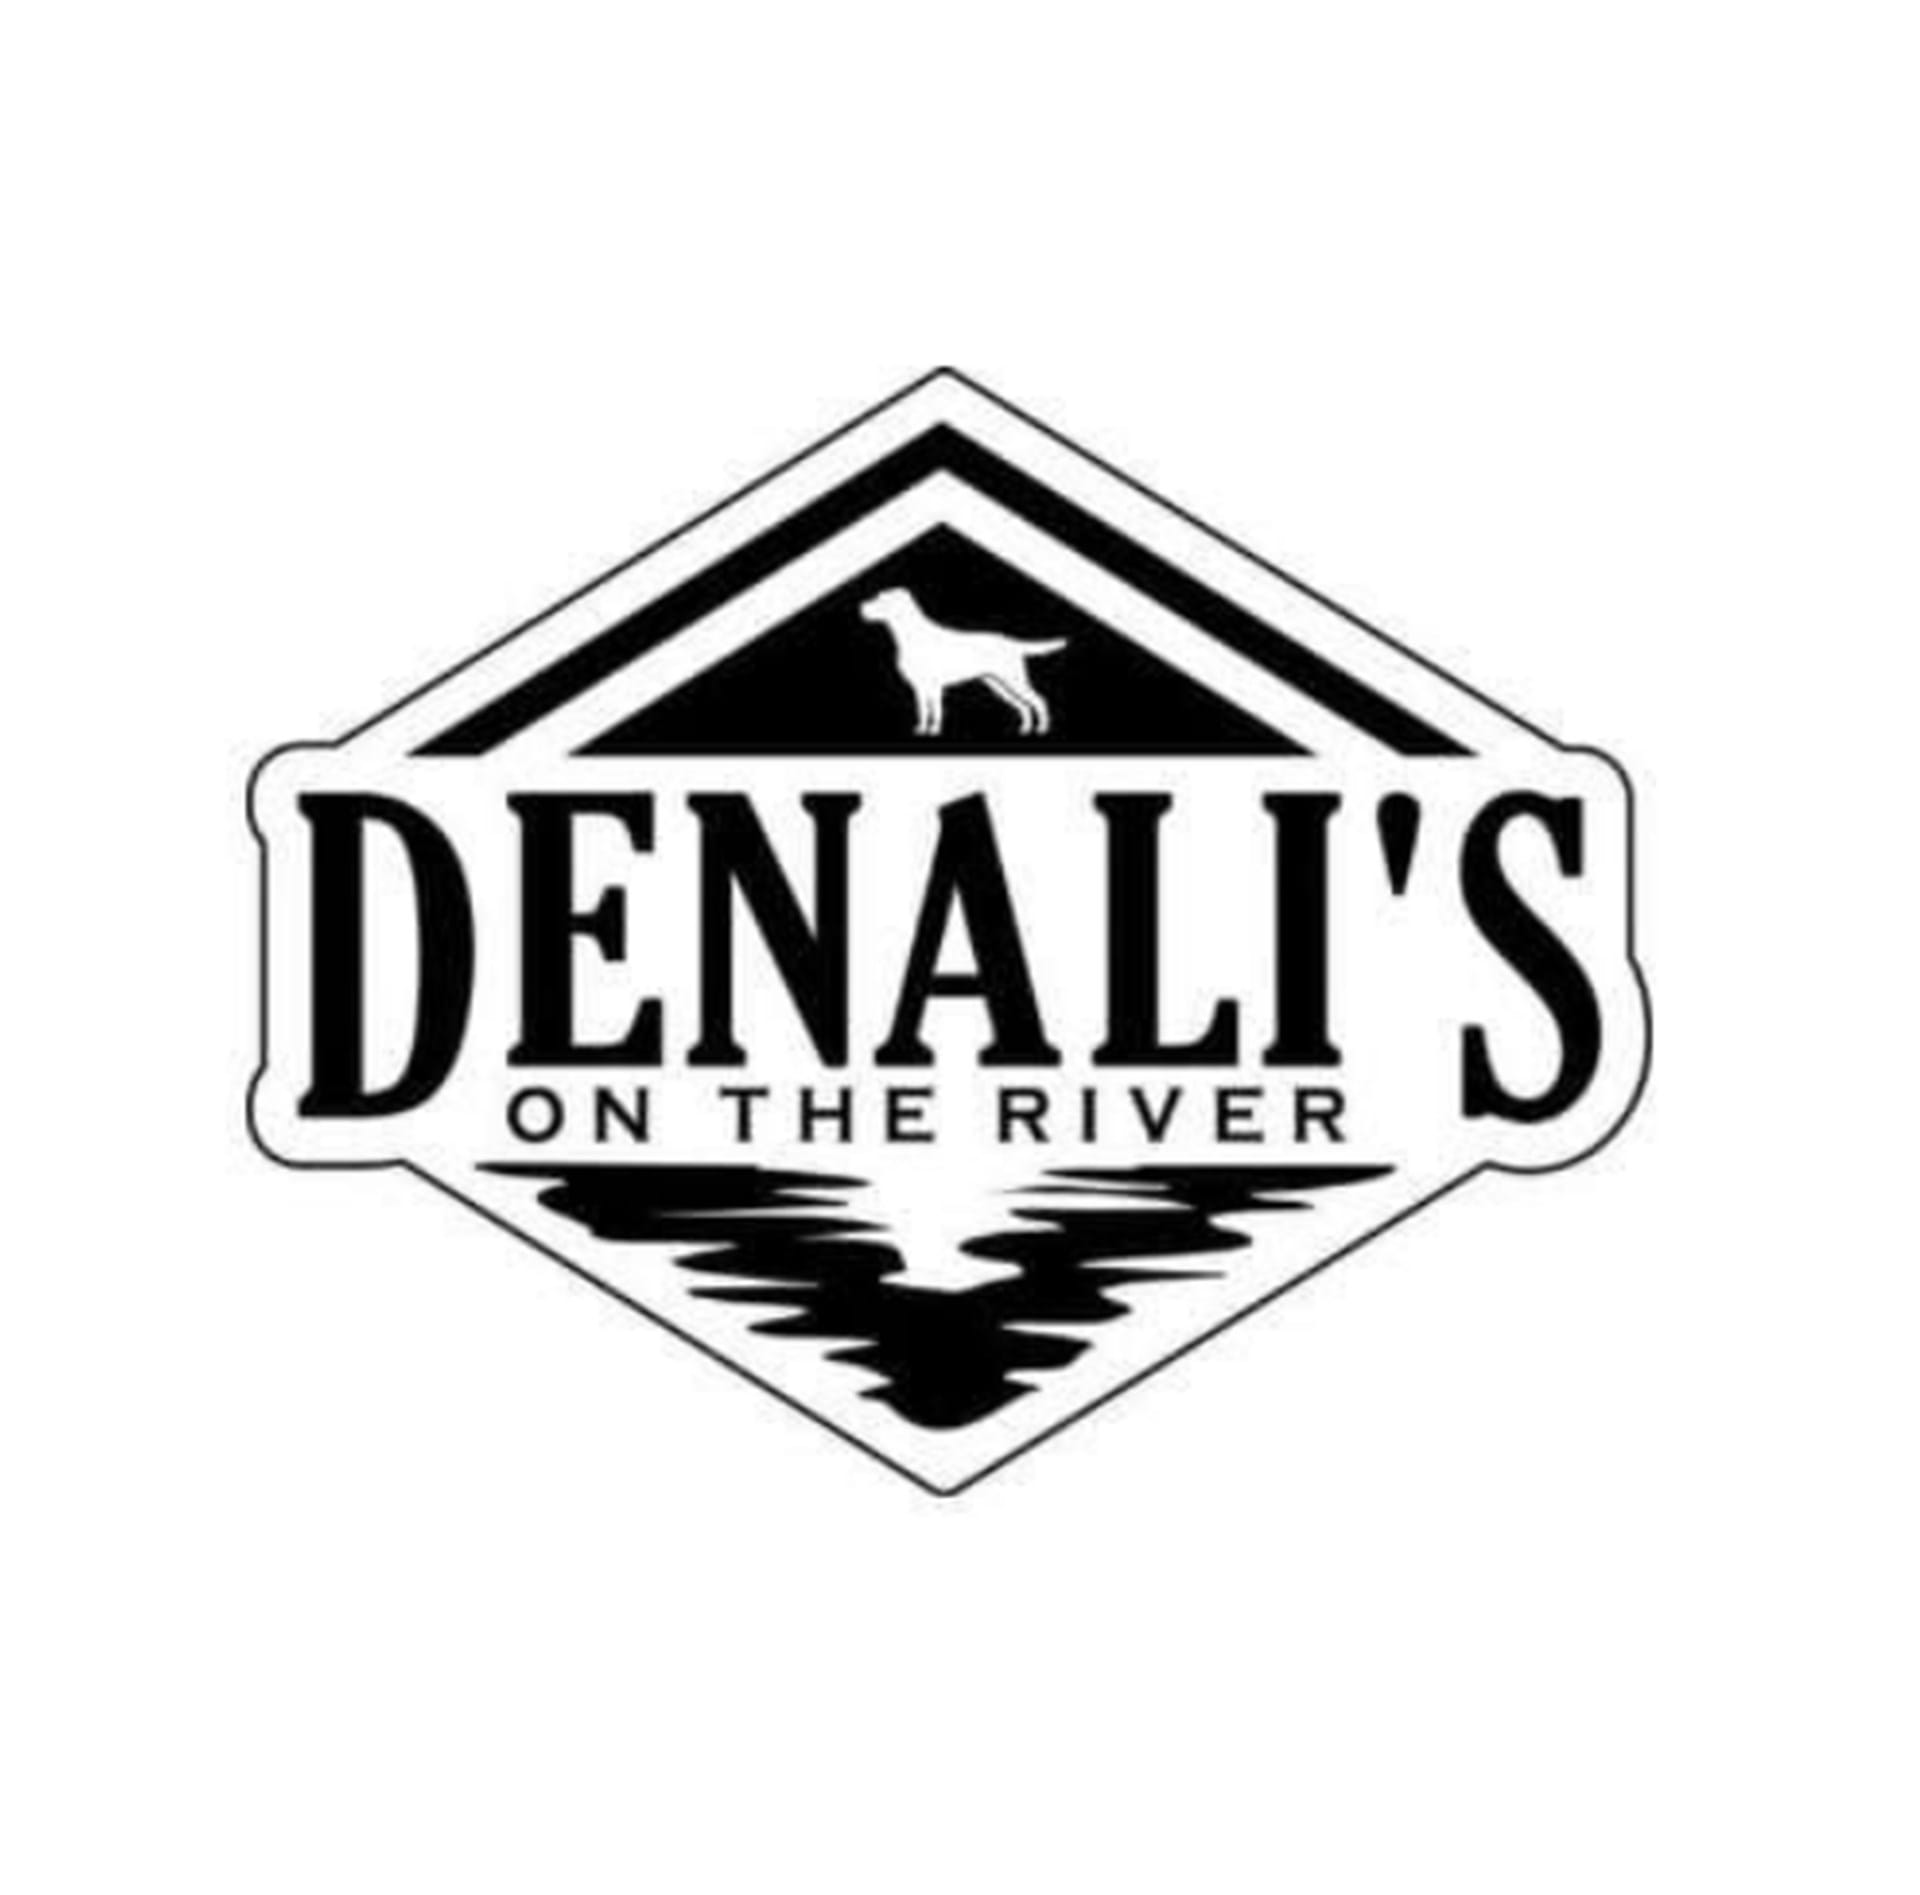 Denali's on the River